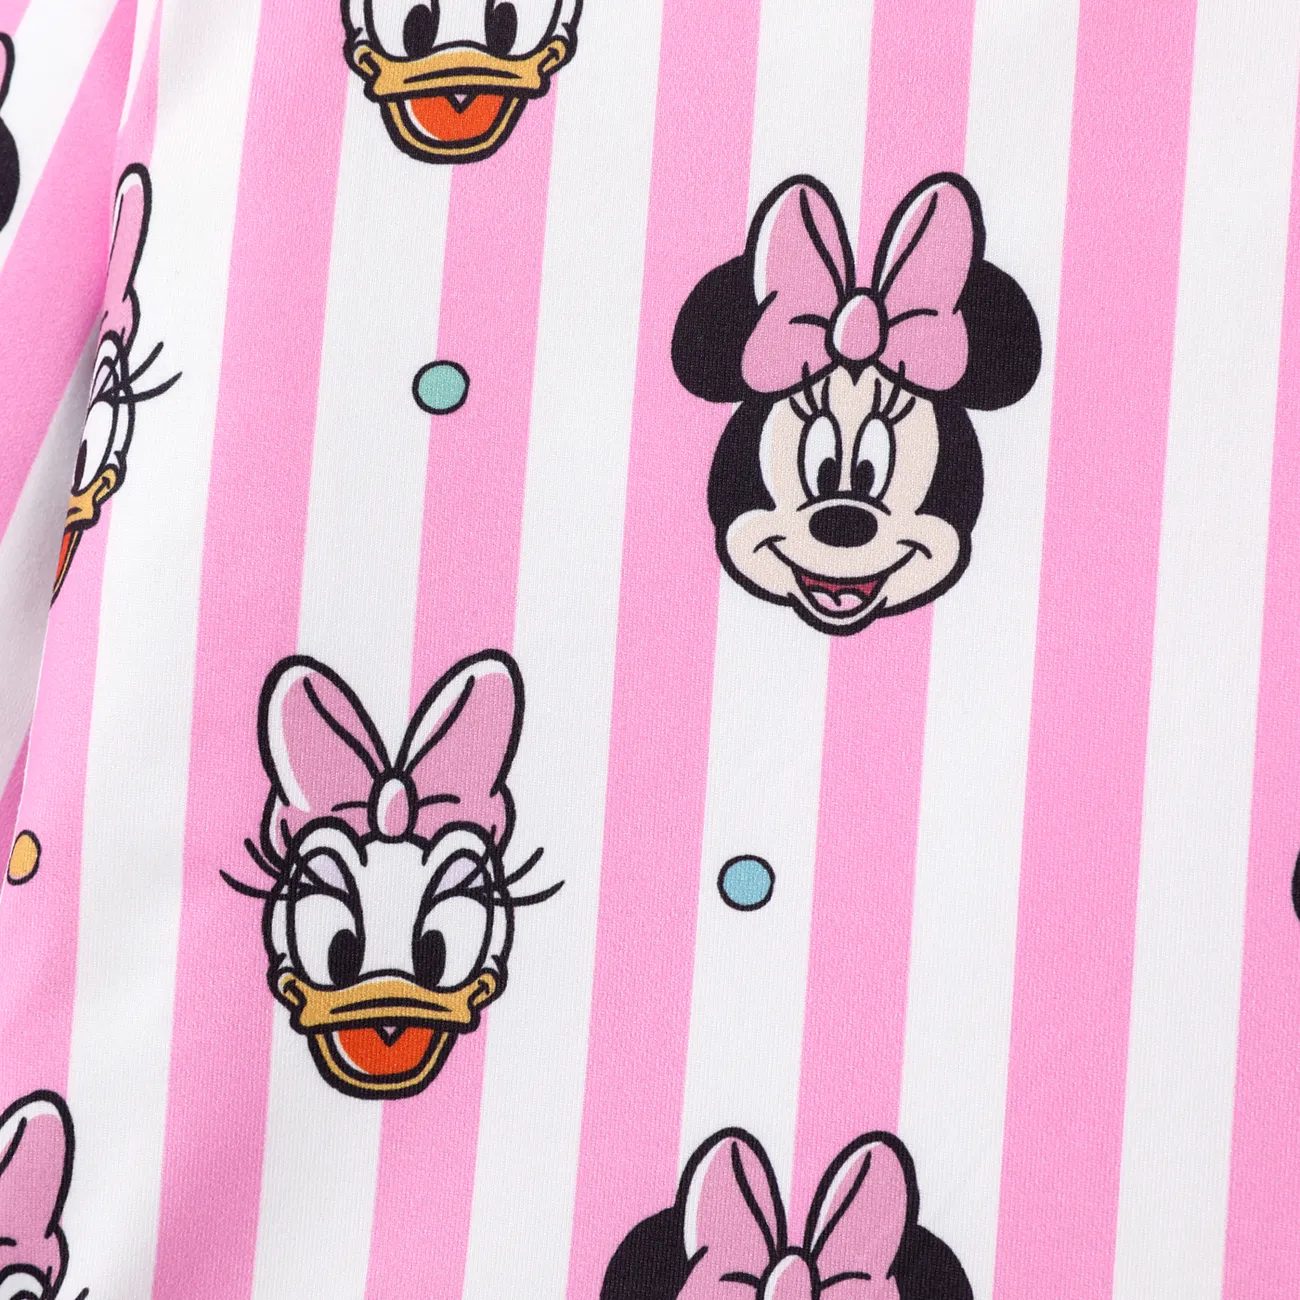 Disney Mickey and Friends Toddler Girl Polka Dot/Stripe Digital Print Dress Pink big image 1